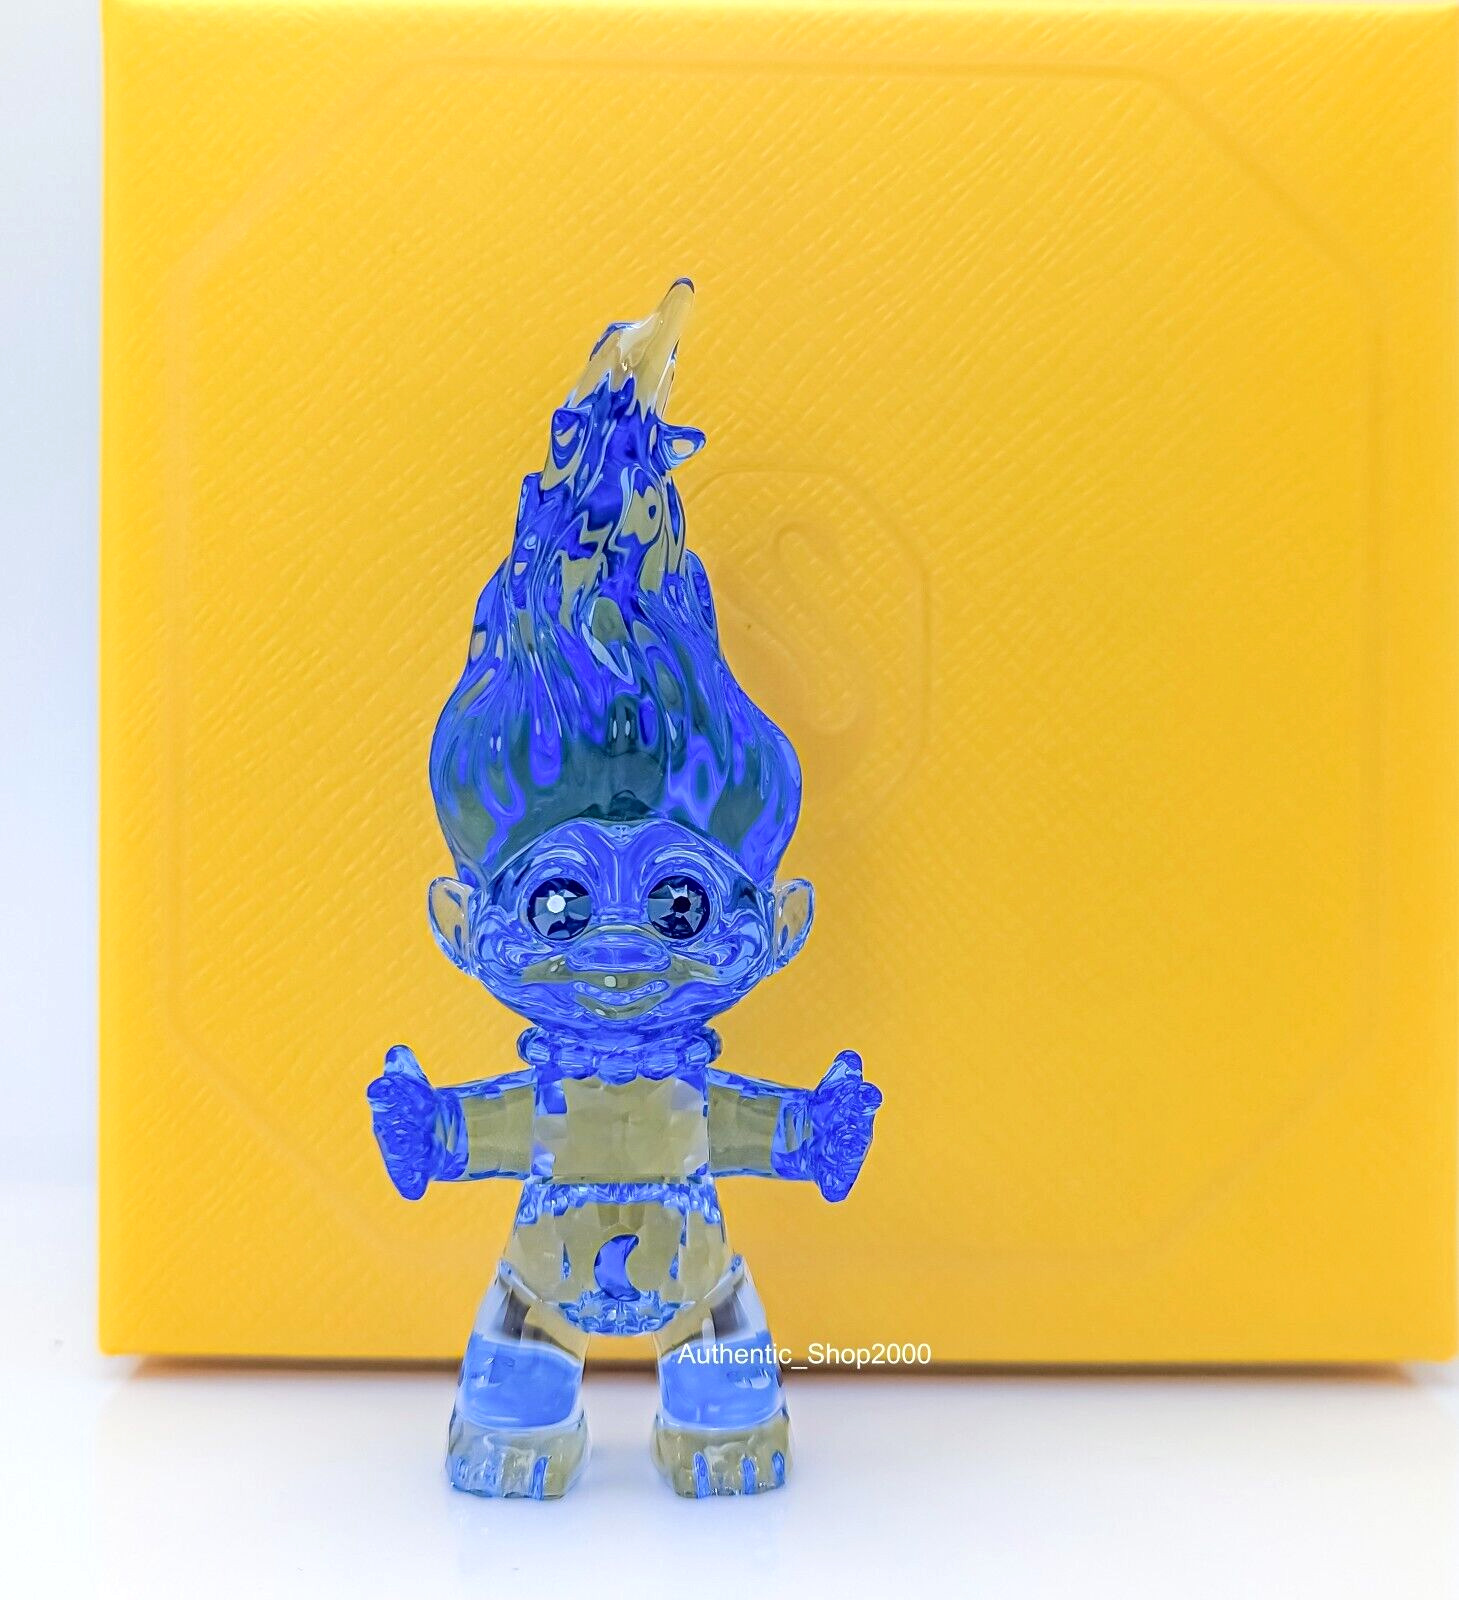 New SWAROVSKI Crystal DreamWorks Good Luck Trolls Blue Troll Figurine 5682655